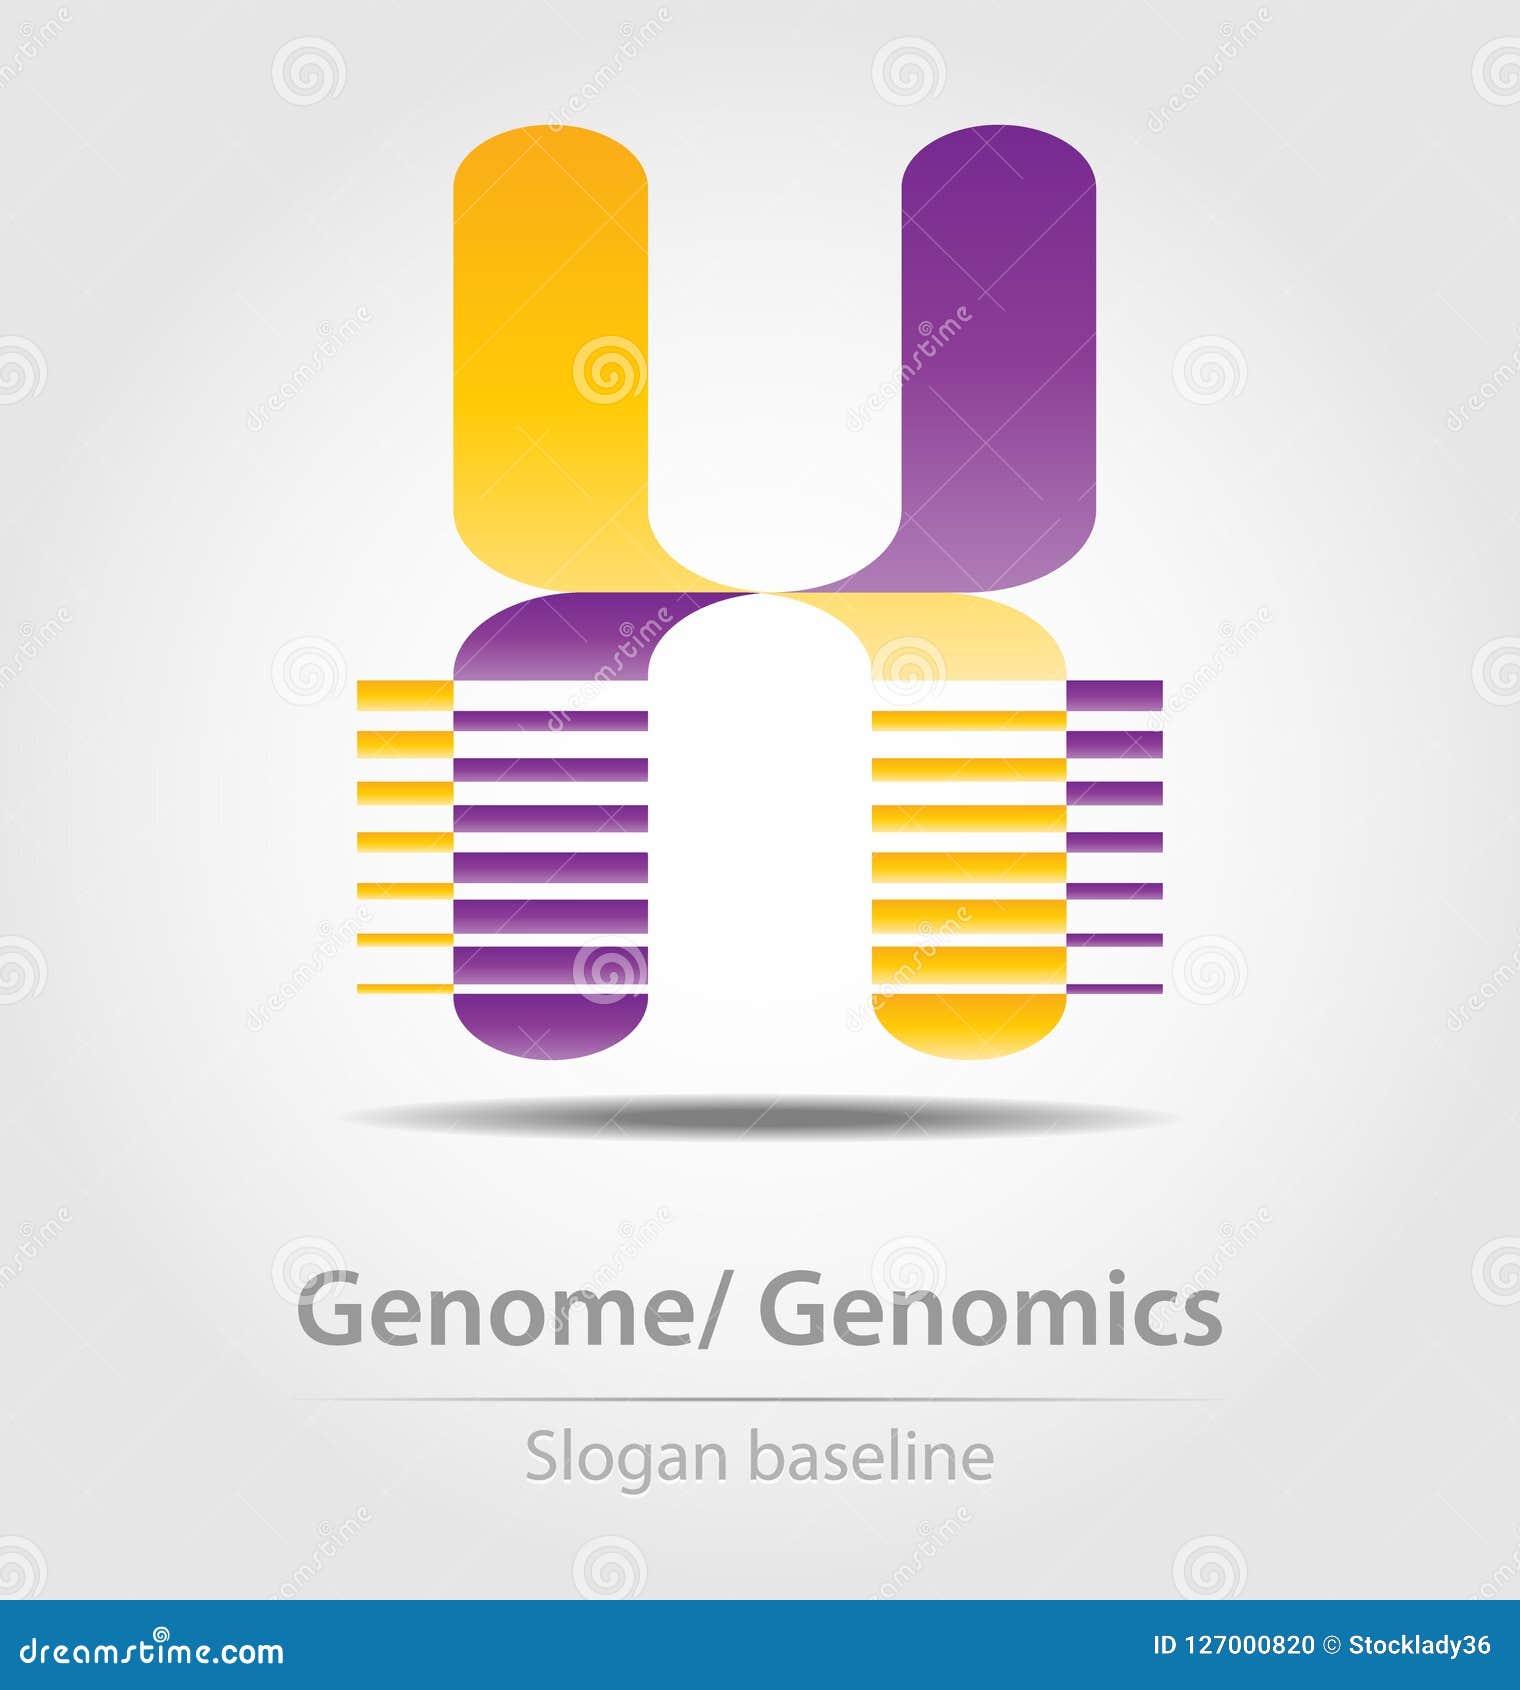 genome analysis,genomics  business icon